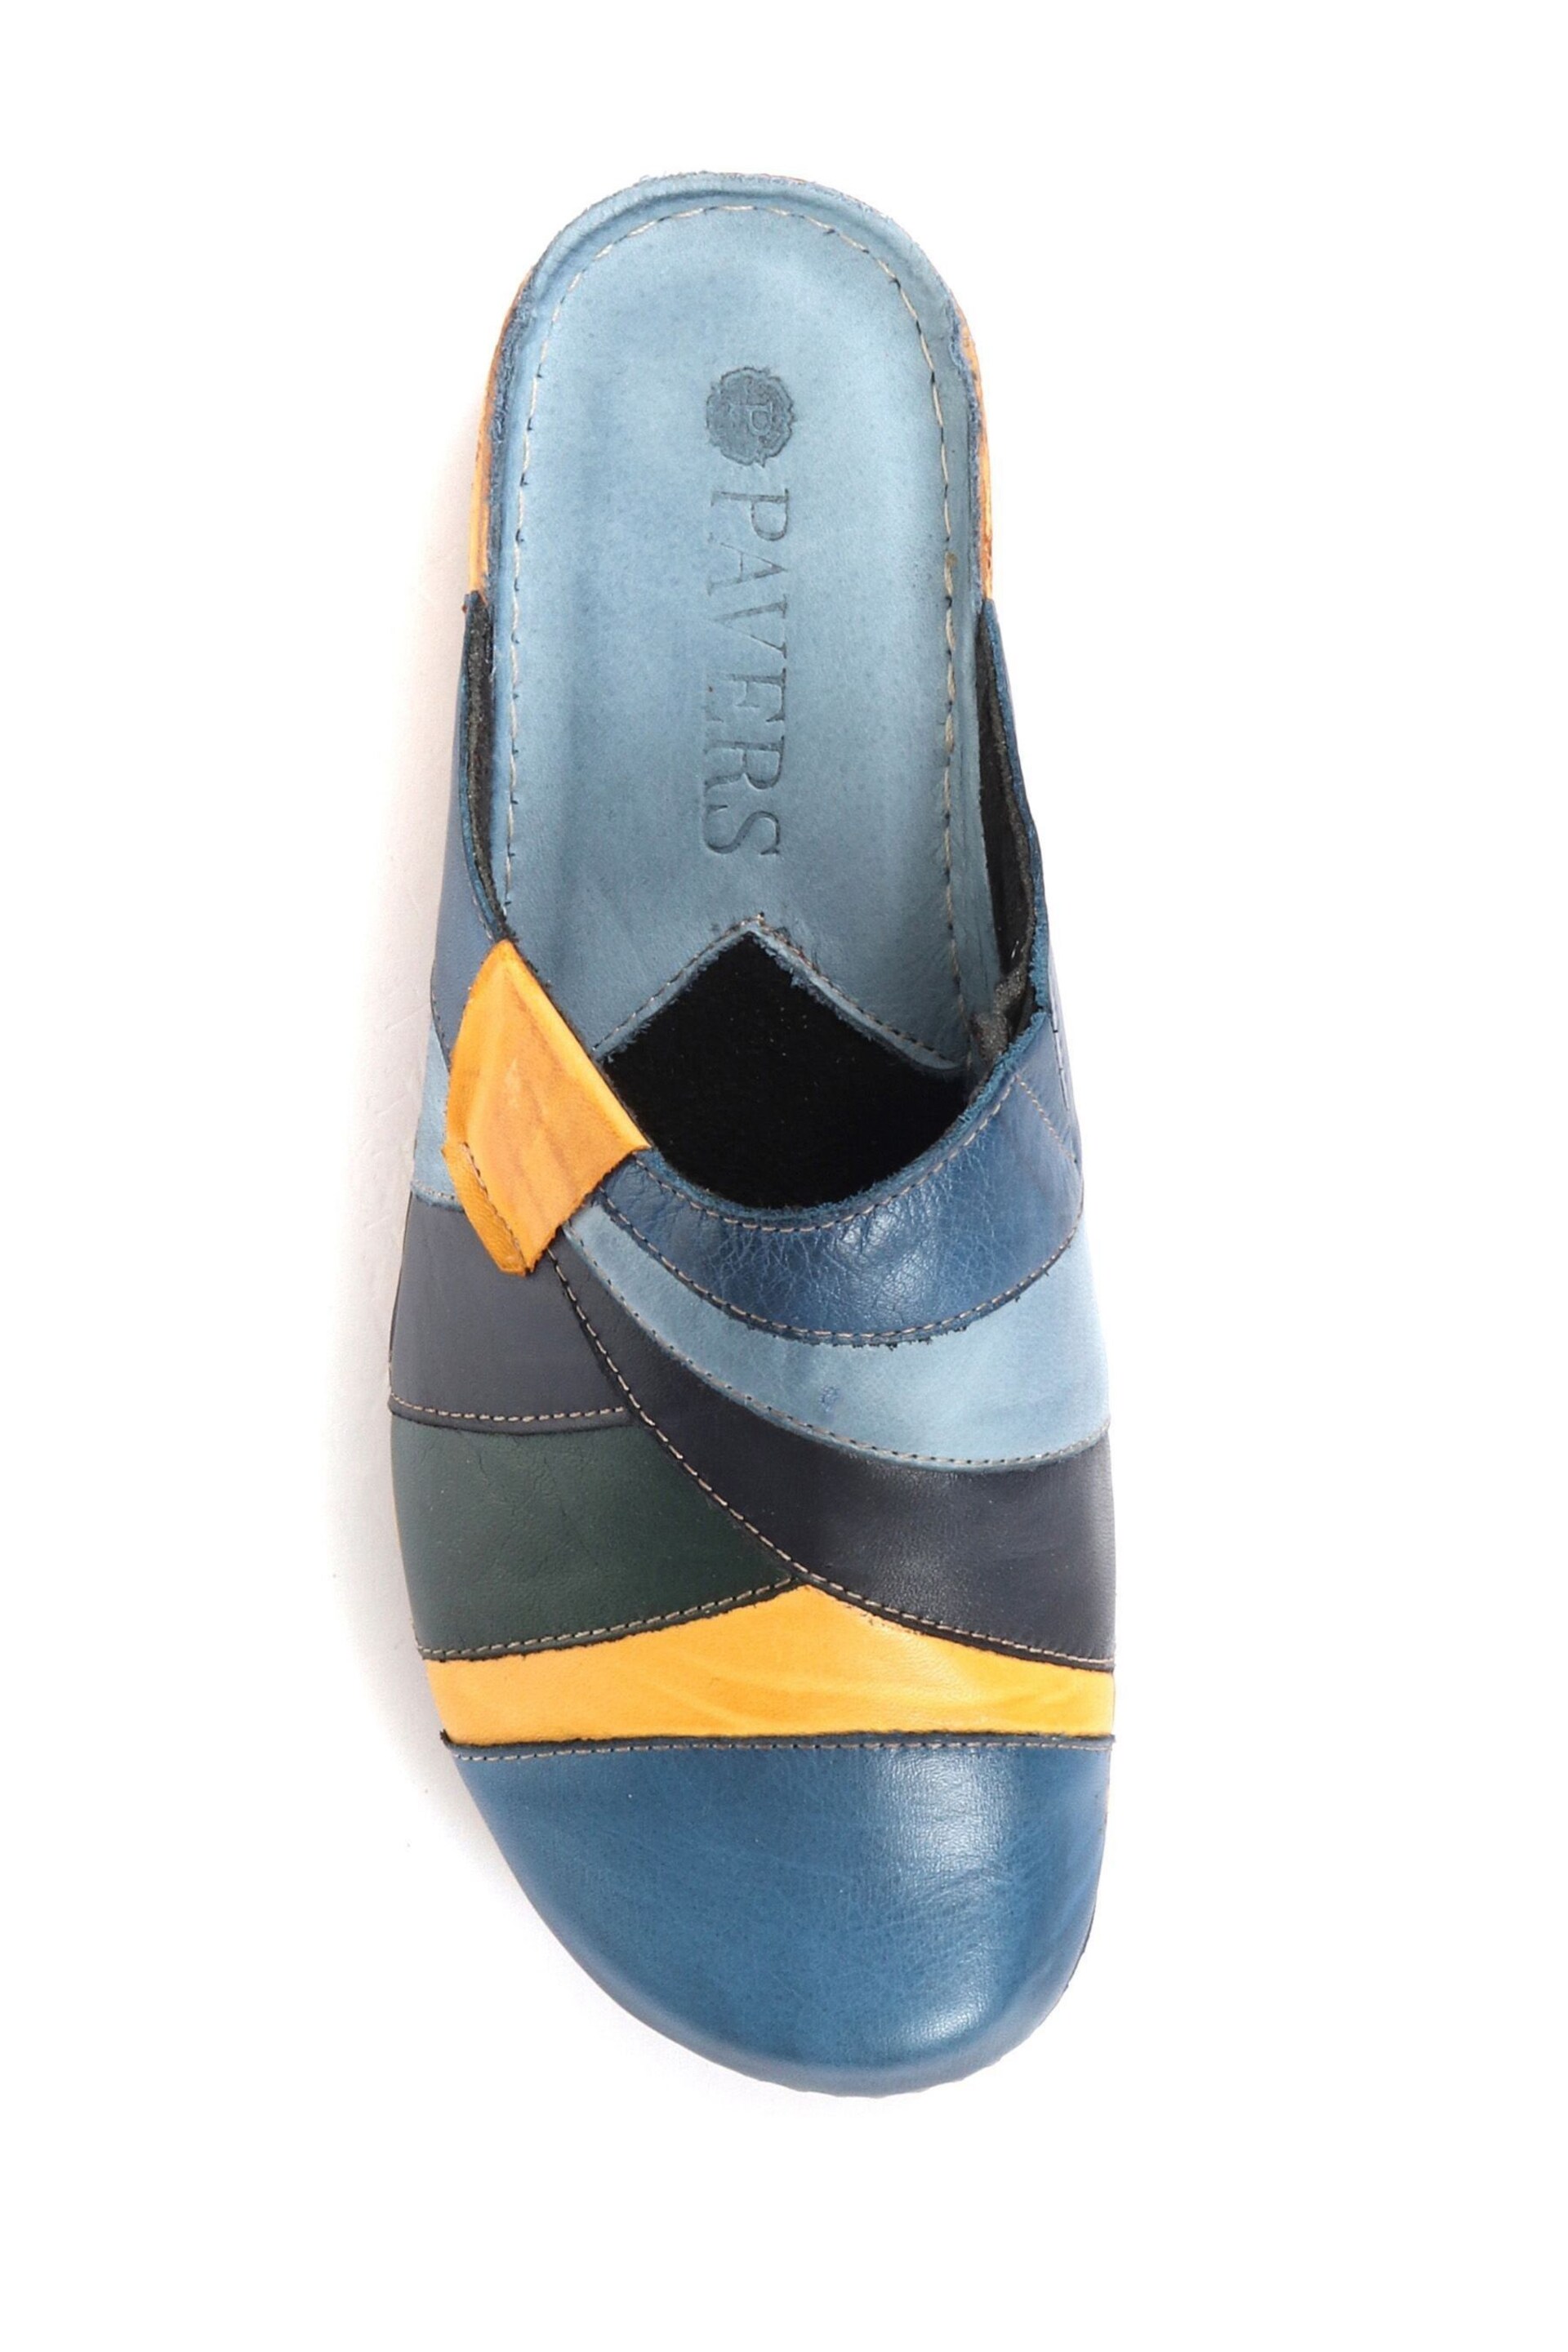 Pavers Blue Ladies Leather Wedge Heel Clogs - Image 2 of 5